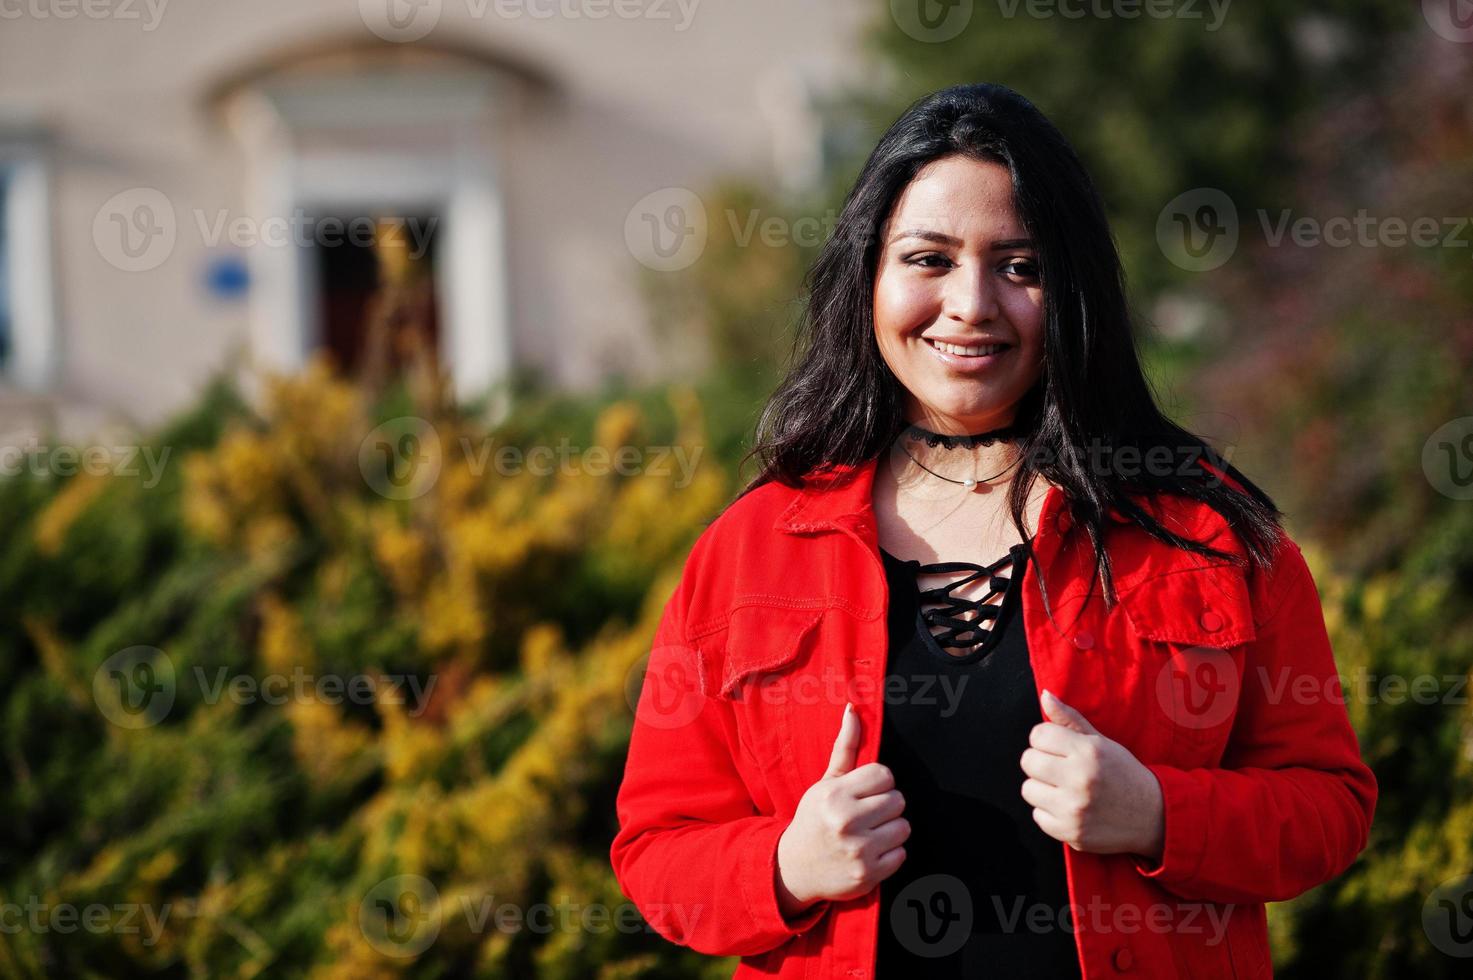 bonita chica modelo latina de ecuador usa chaqueta negra y roja posada en la calle. foto